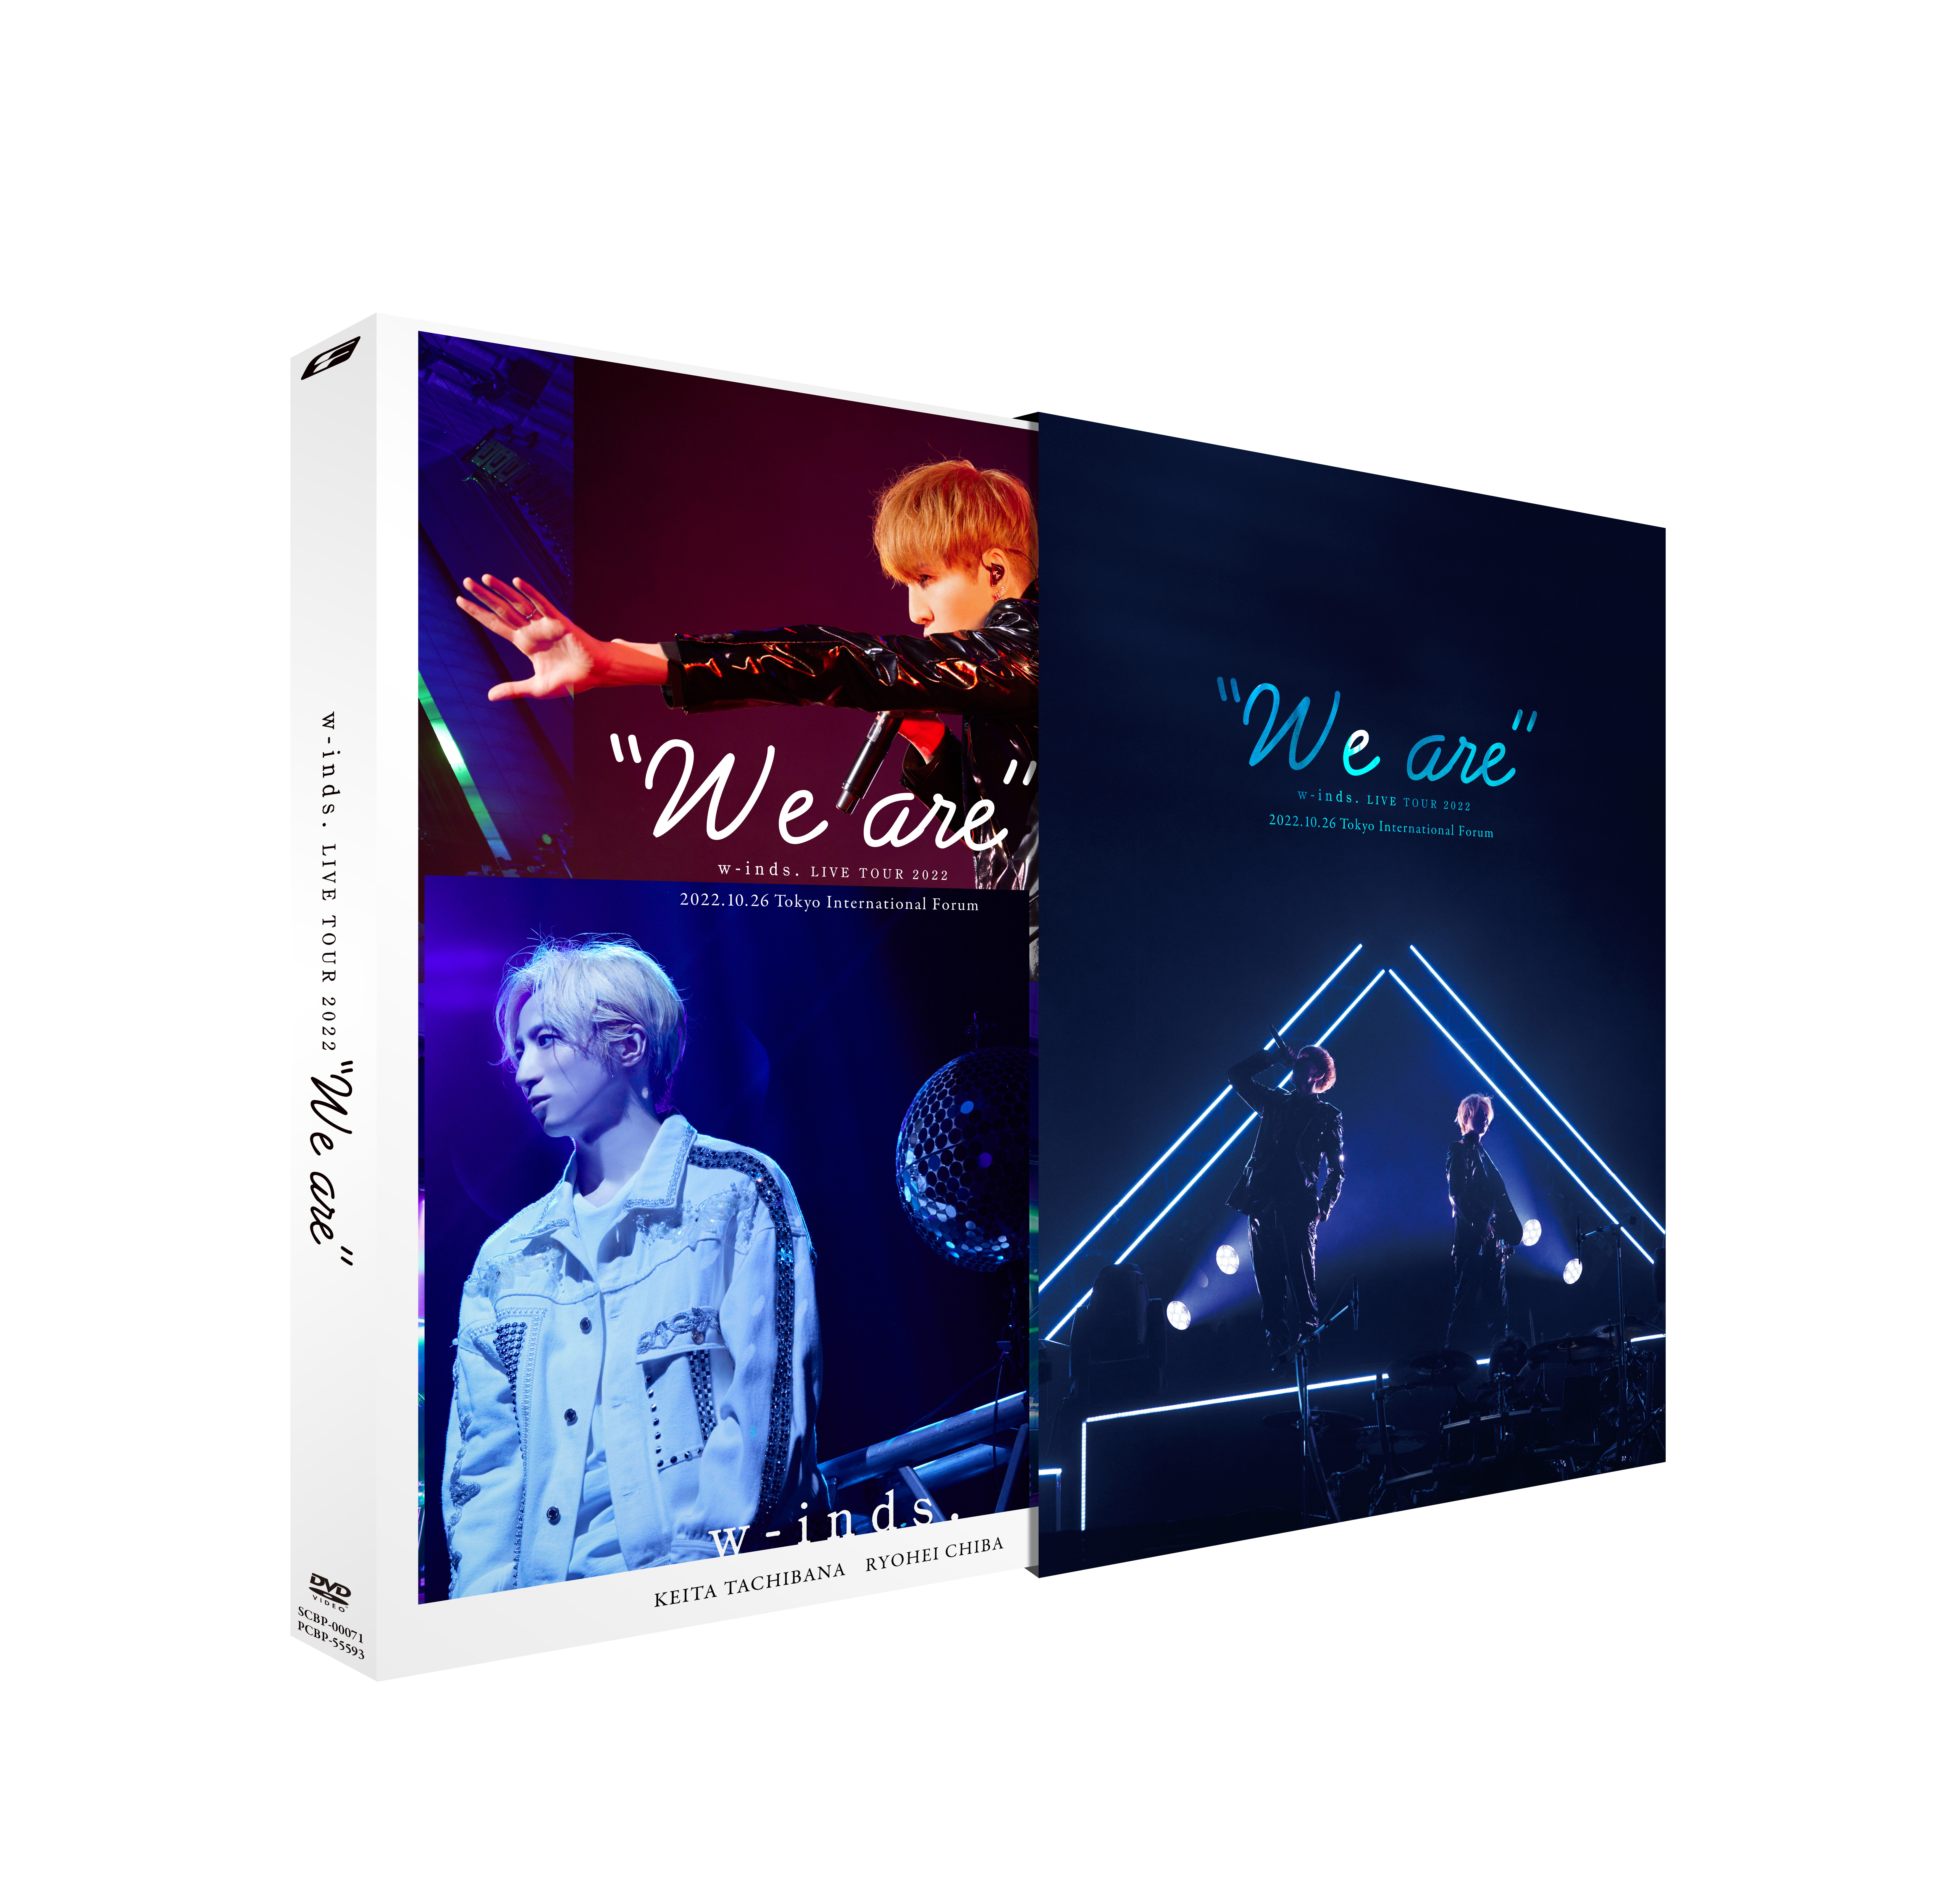 映像作品「w-inds. LIVE TOUR 2022 “We are”」3/1(水)発売！《収録内容